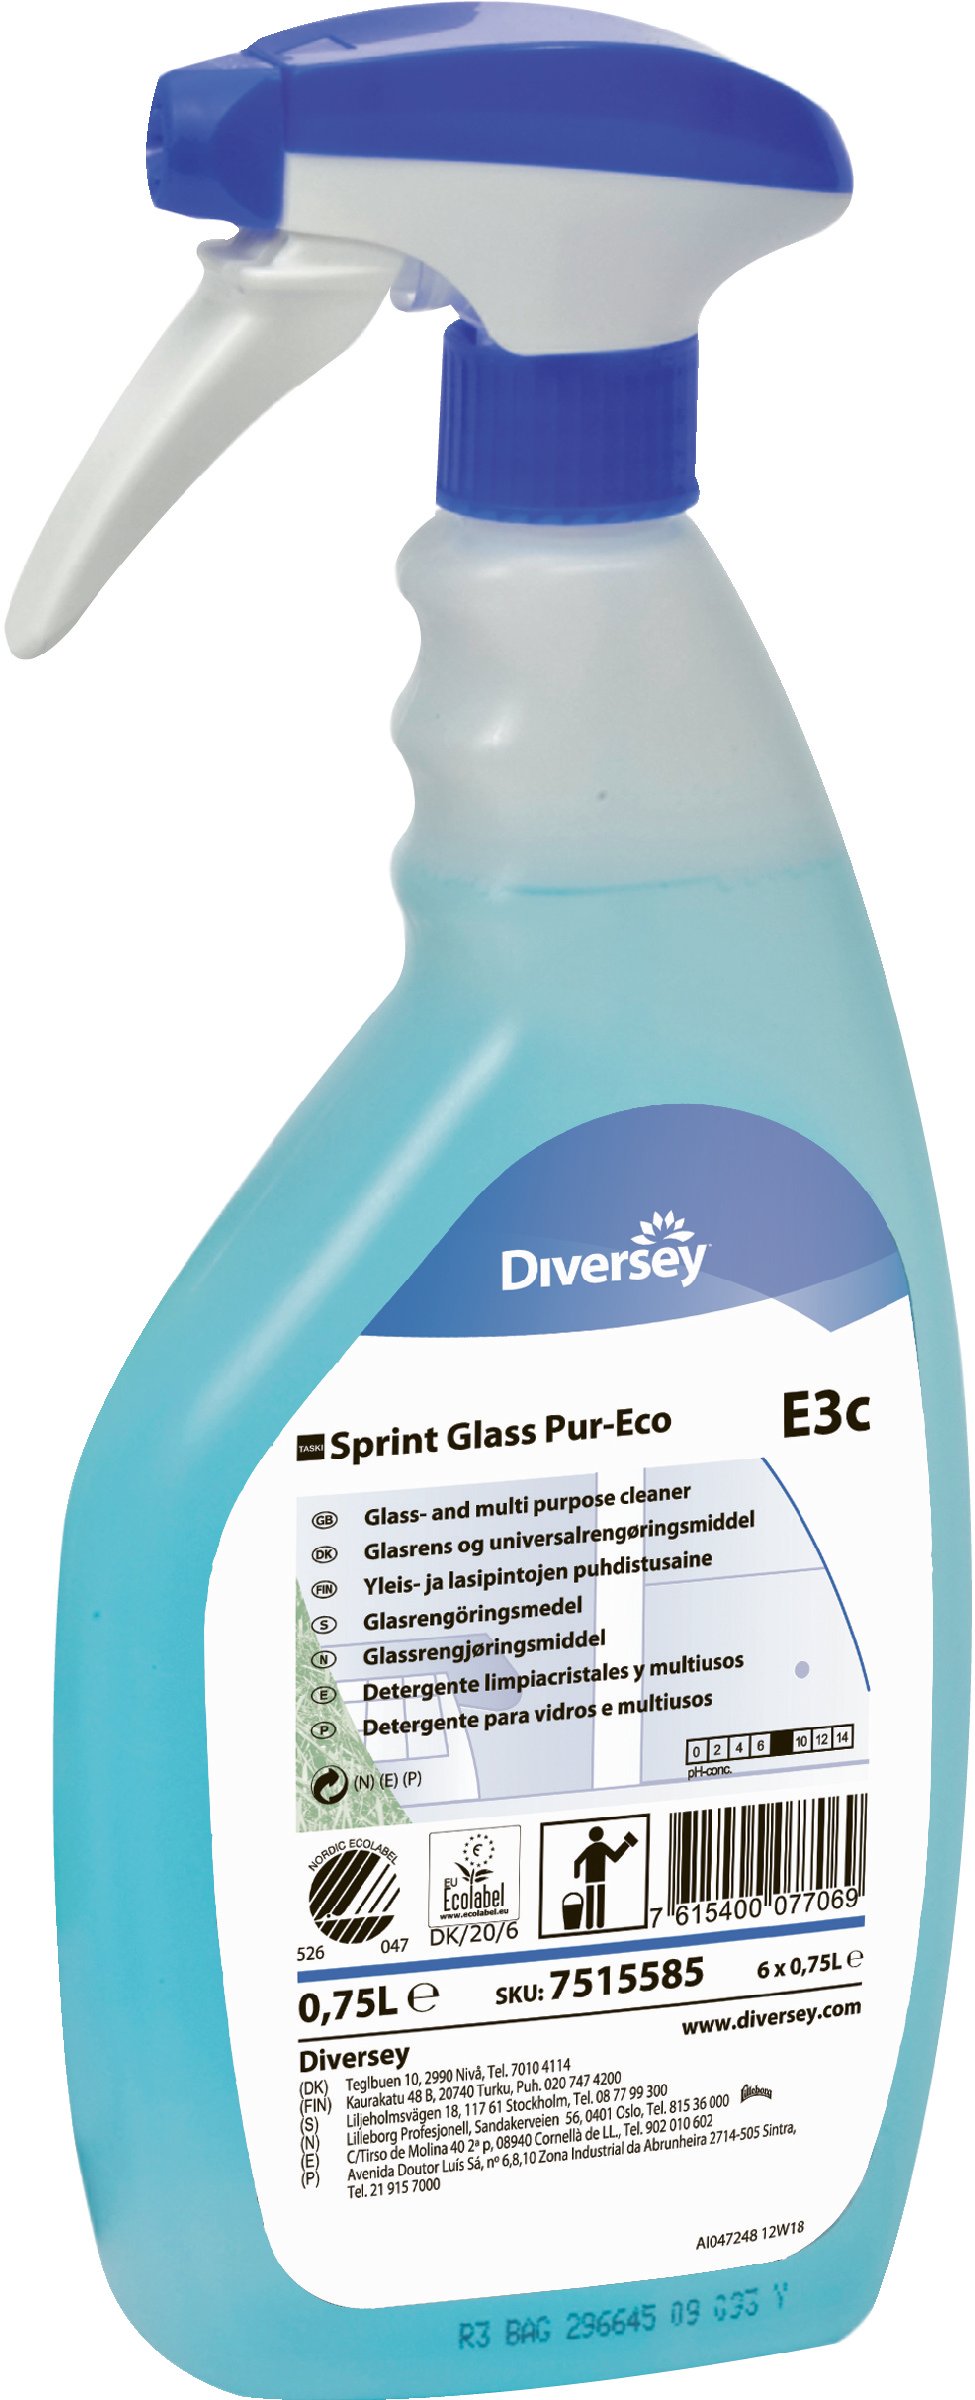 Fönsterputs Diversey Taski Sprint Glass Pur-Eco E3c 750ml 52060006